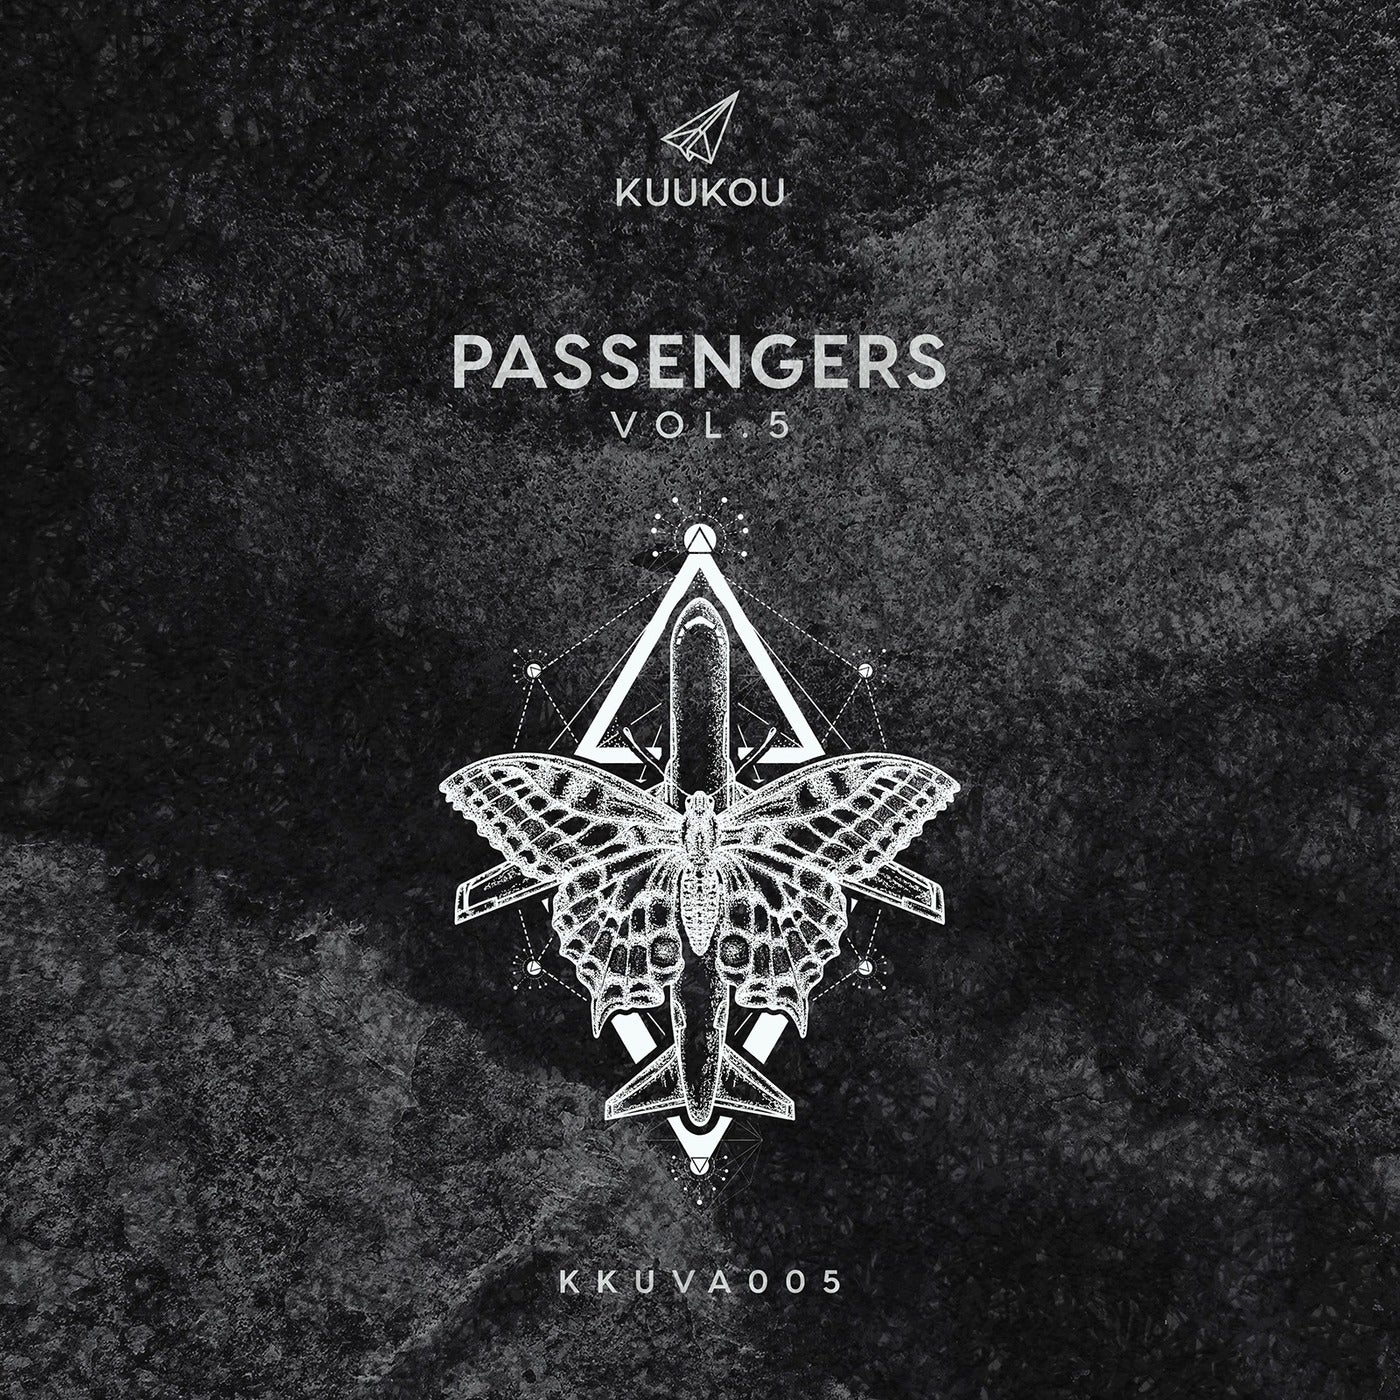 Passengers, Vol. 5